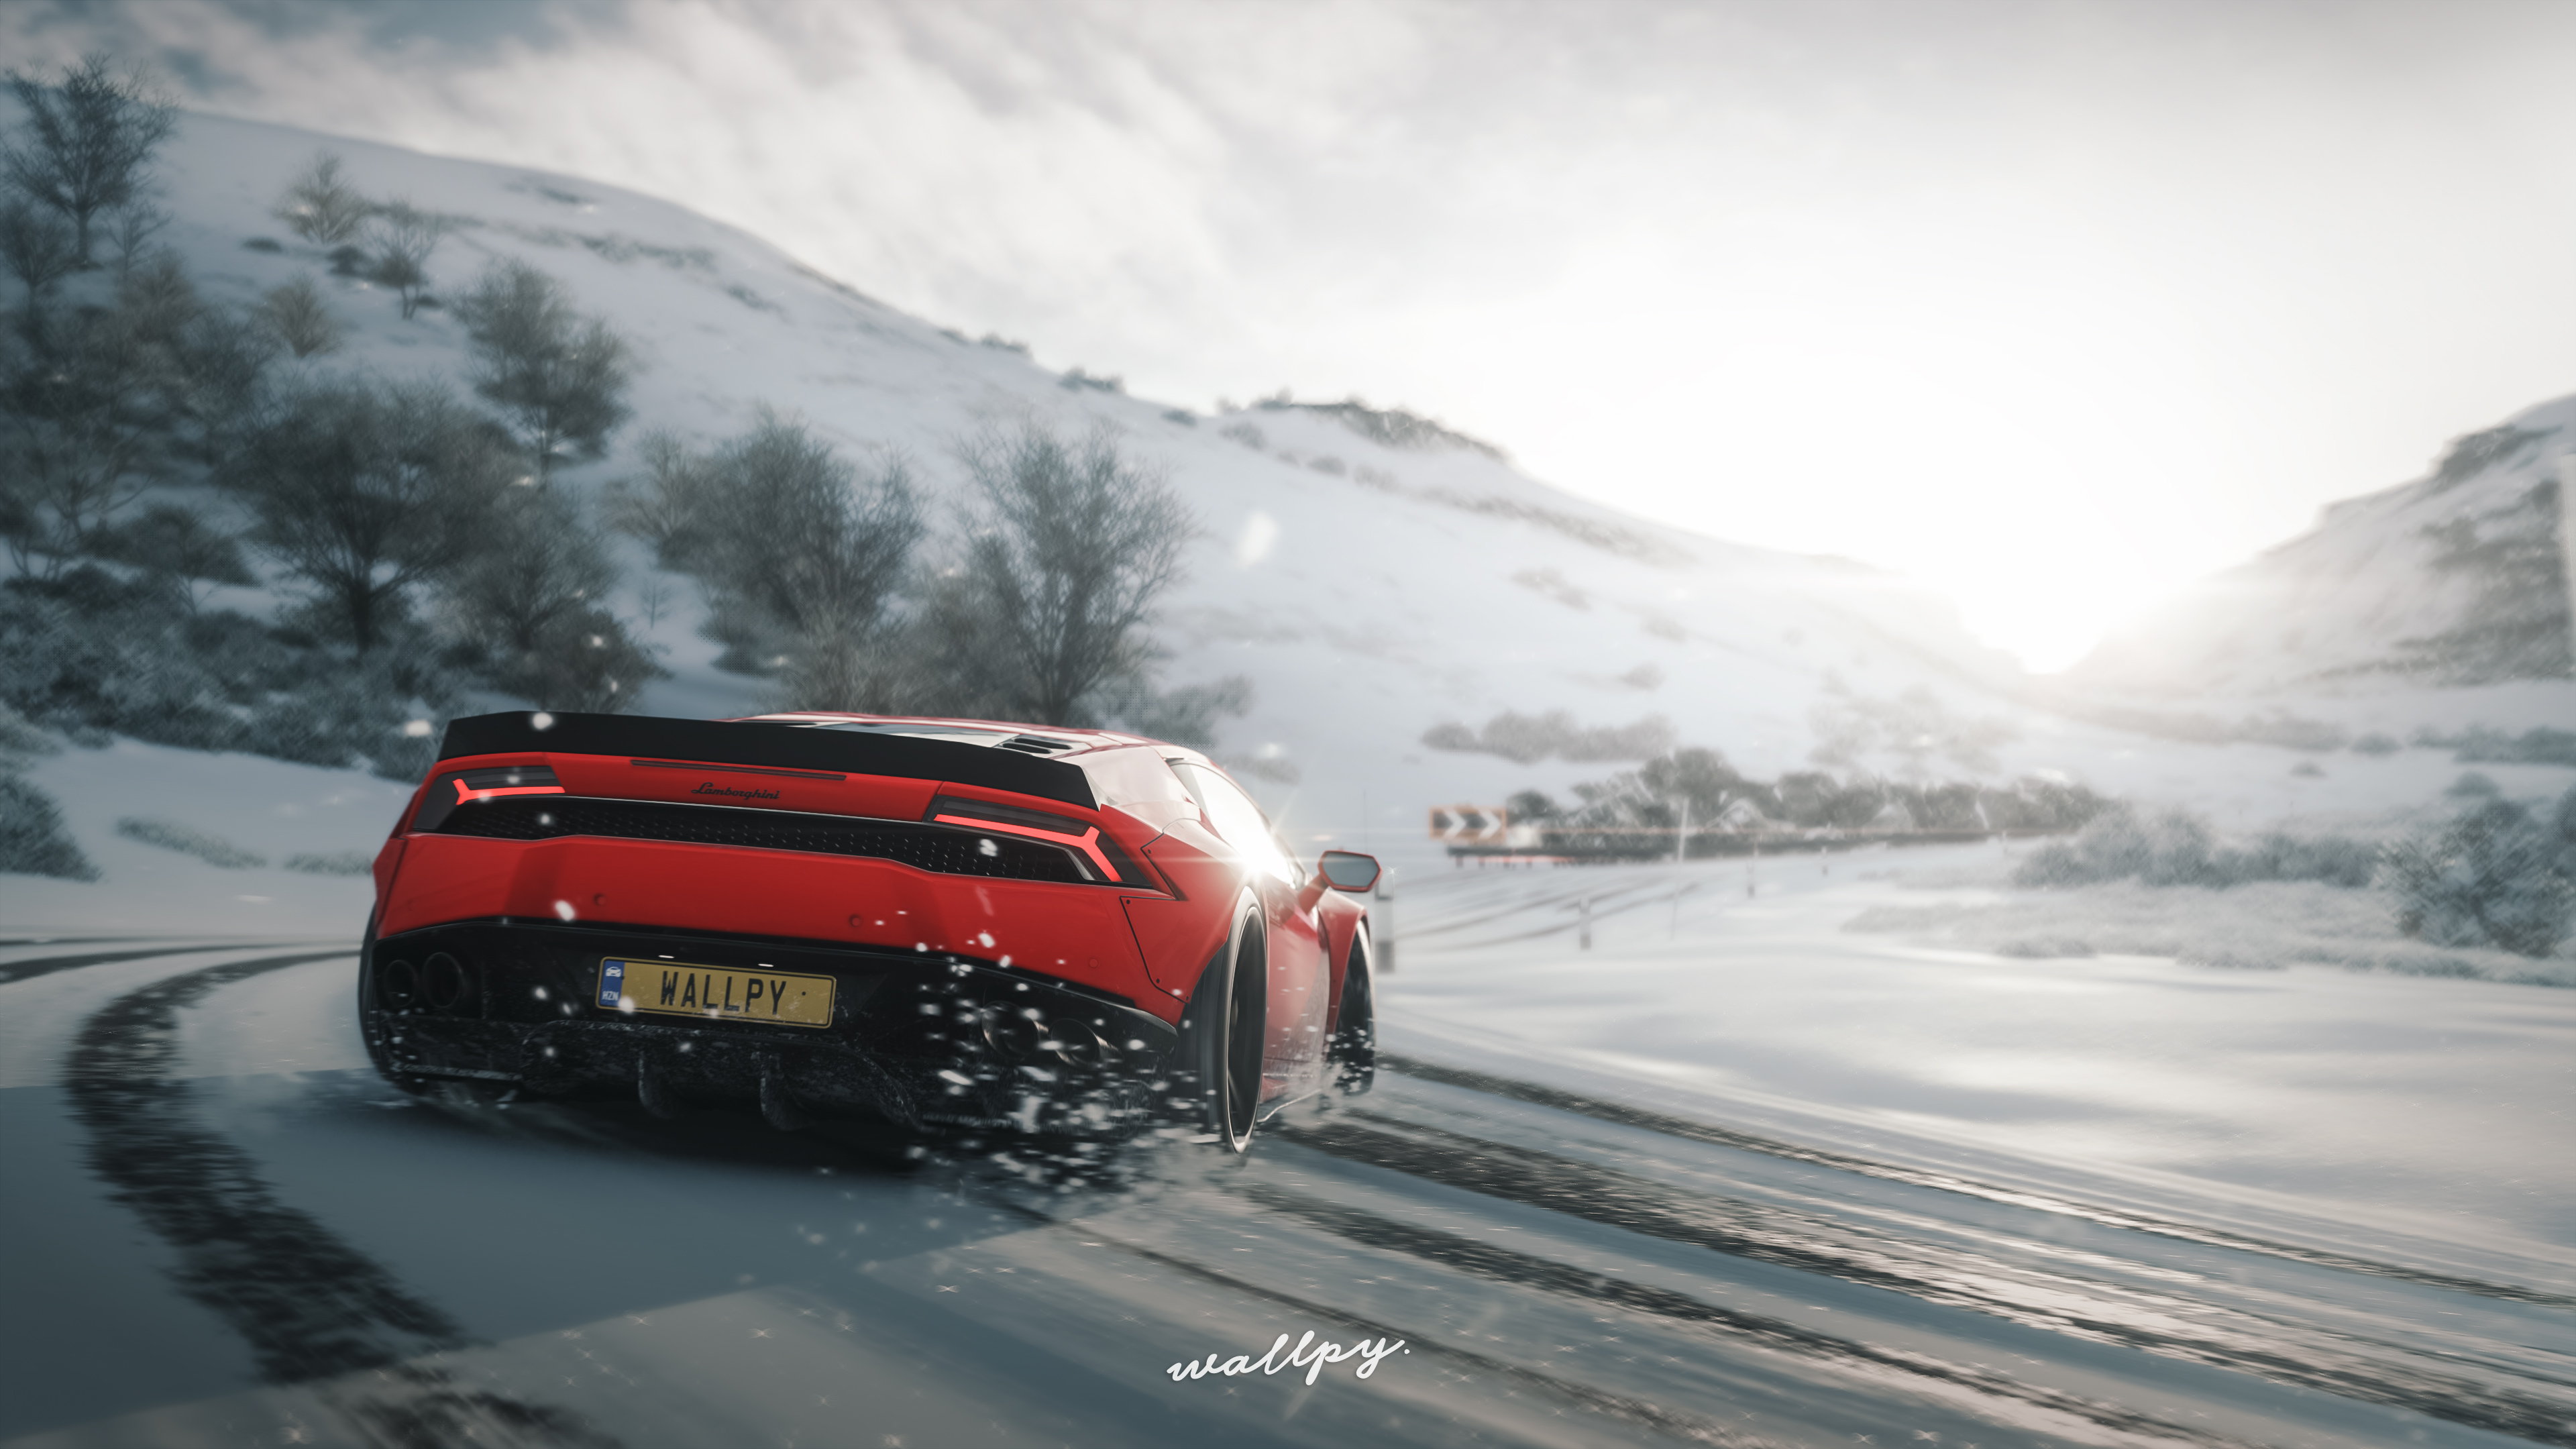 Wallpaper 4k Lamborghini Huracan Drift In Snow Forza Horizon 4 Wallpaper